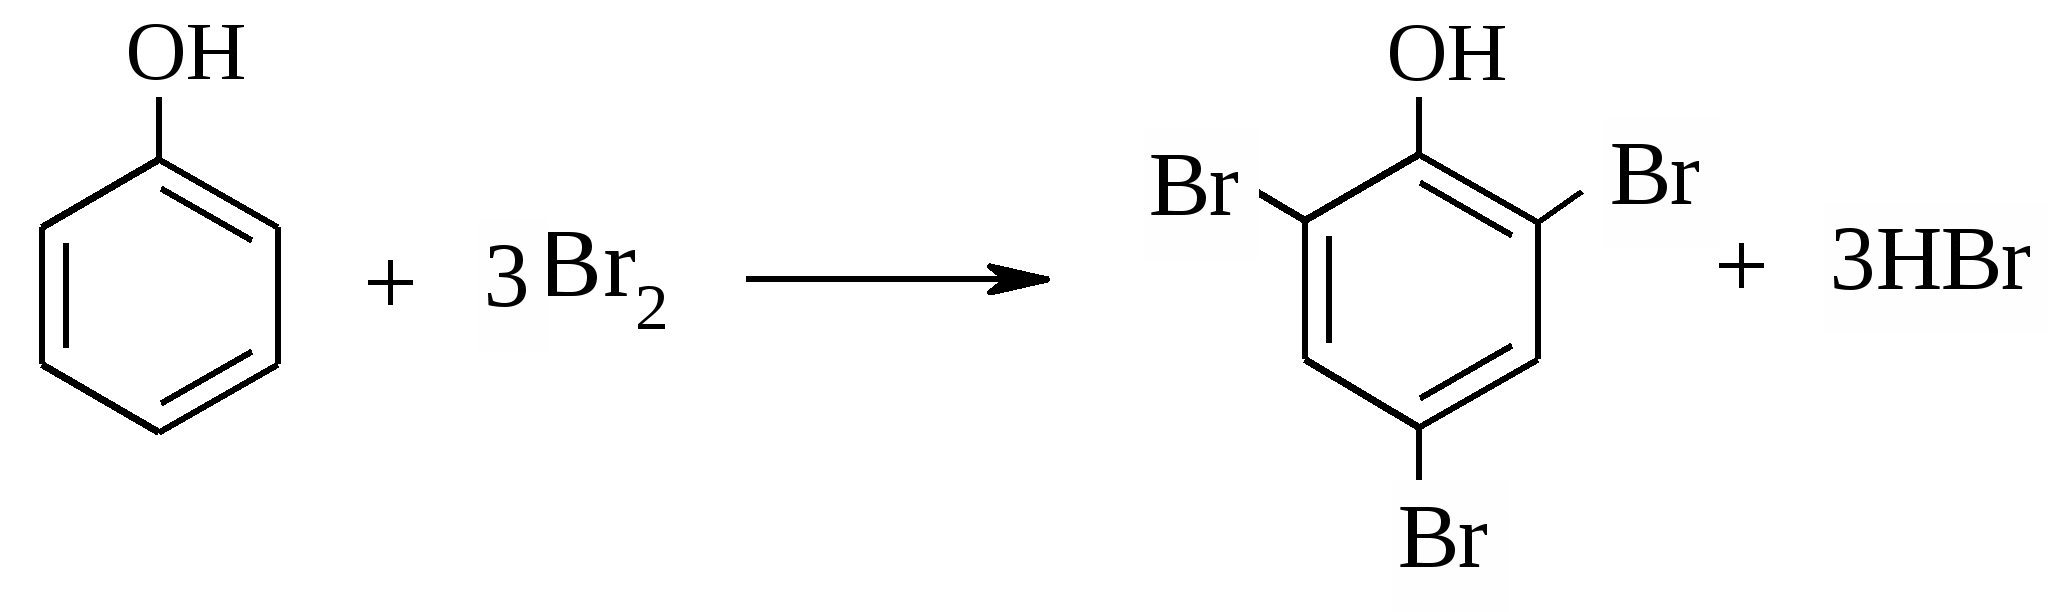 Фенол трибромфенол реакция. 2 4 6 Трибромфенол. 2,4,6-Трибромфенола. 2 4 6 Трибромфенол формула. Окисление трибромфенола.